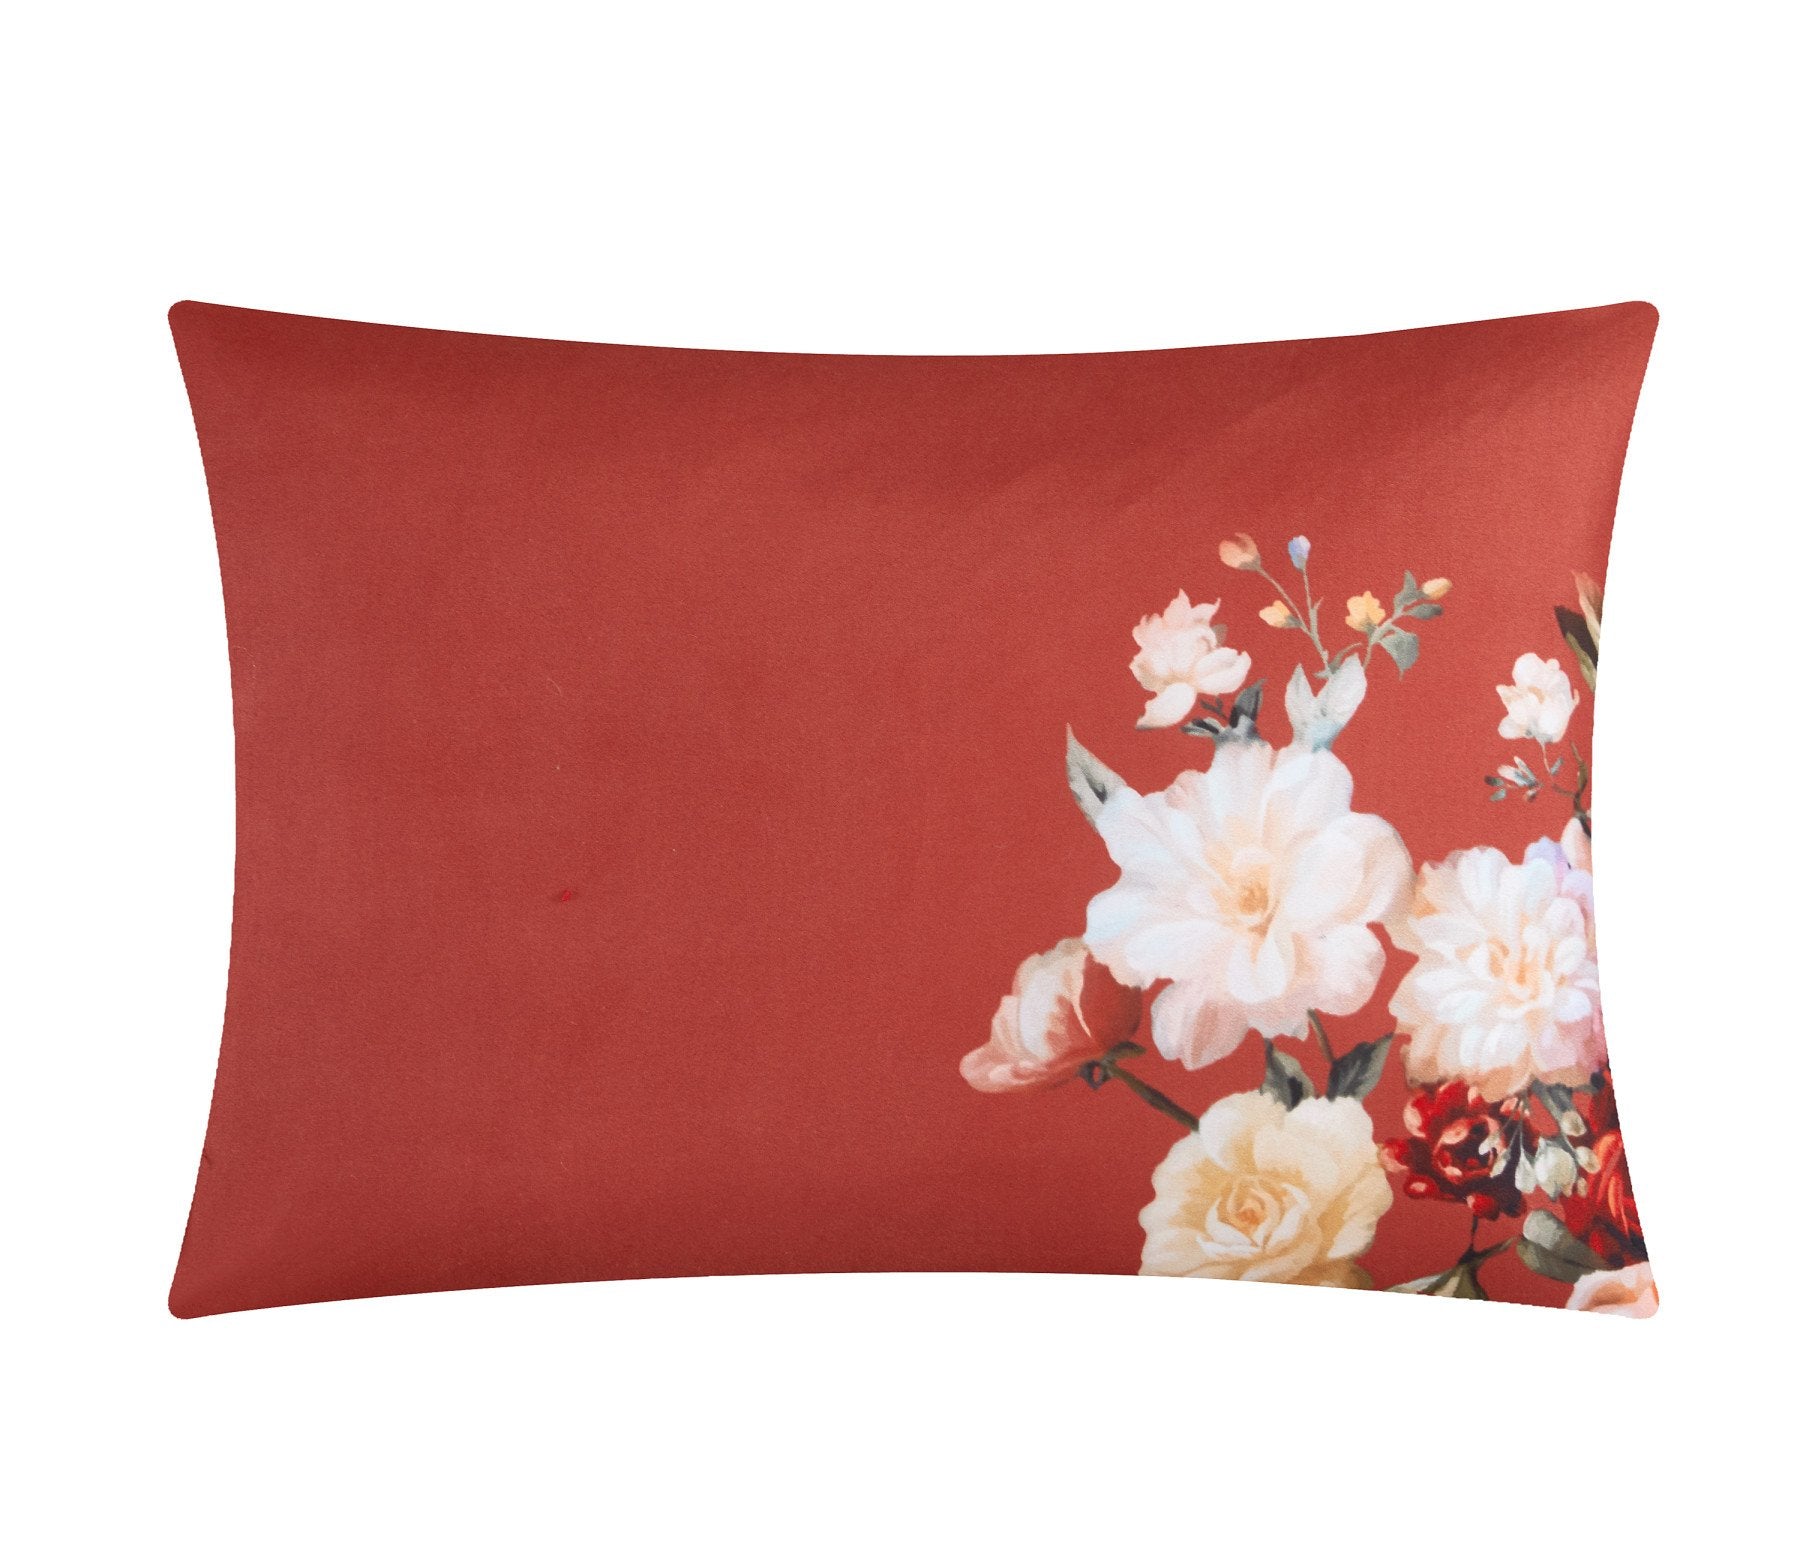 Enid 9 Piece Floral Comforter Set